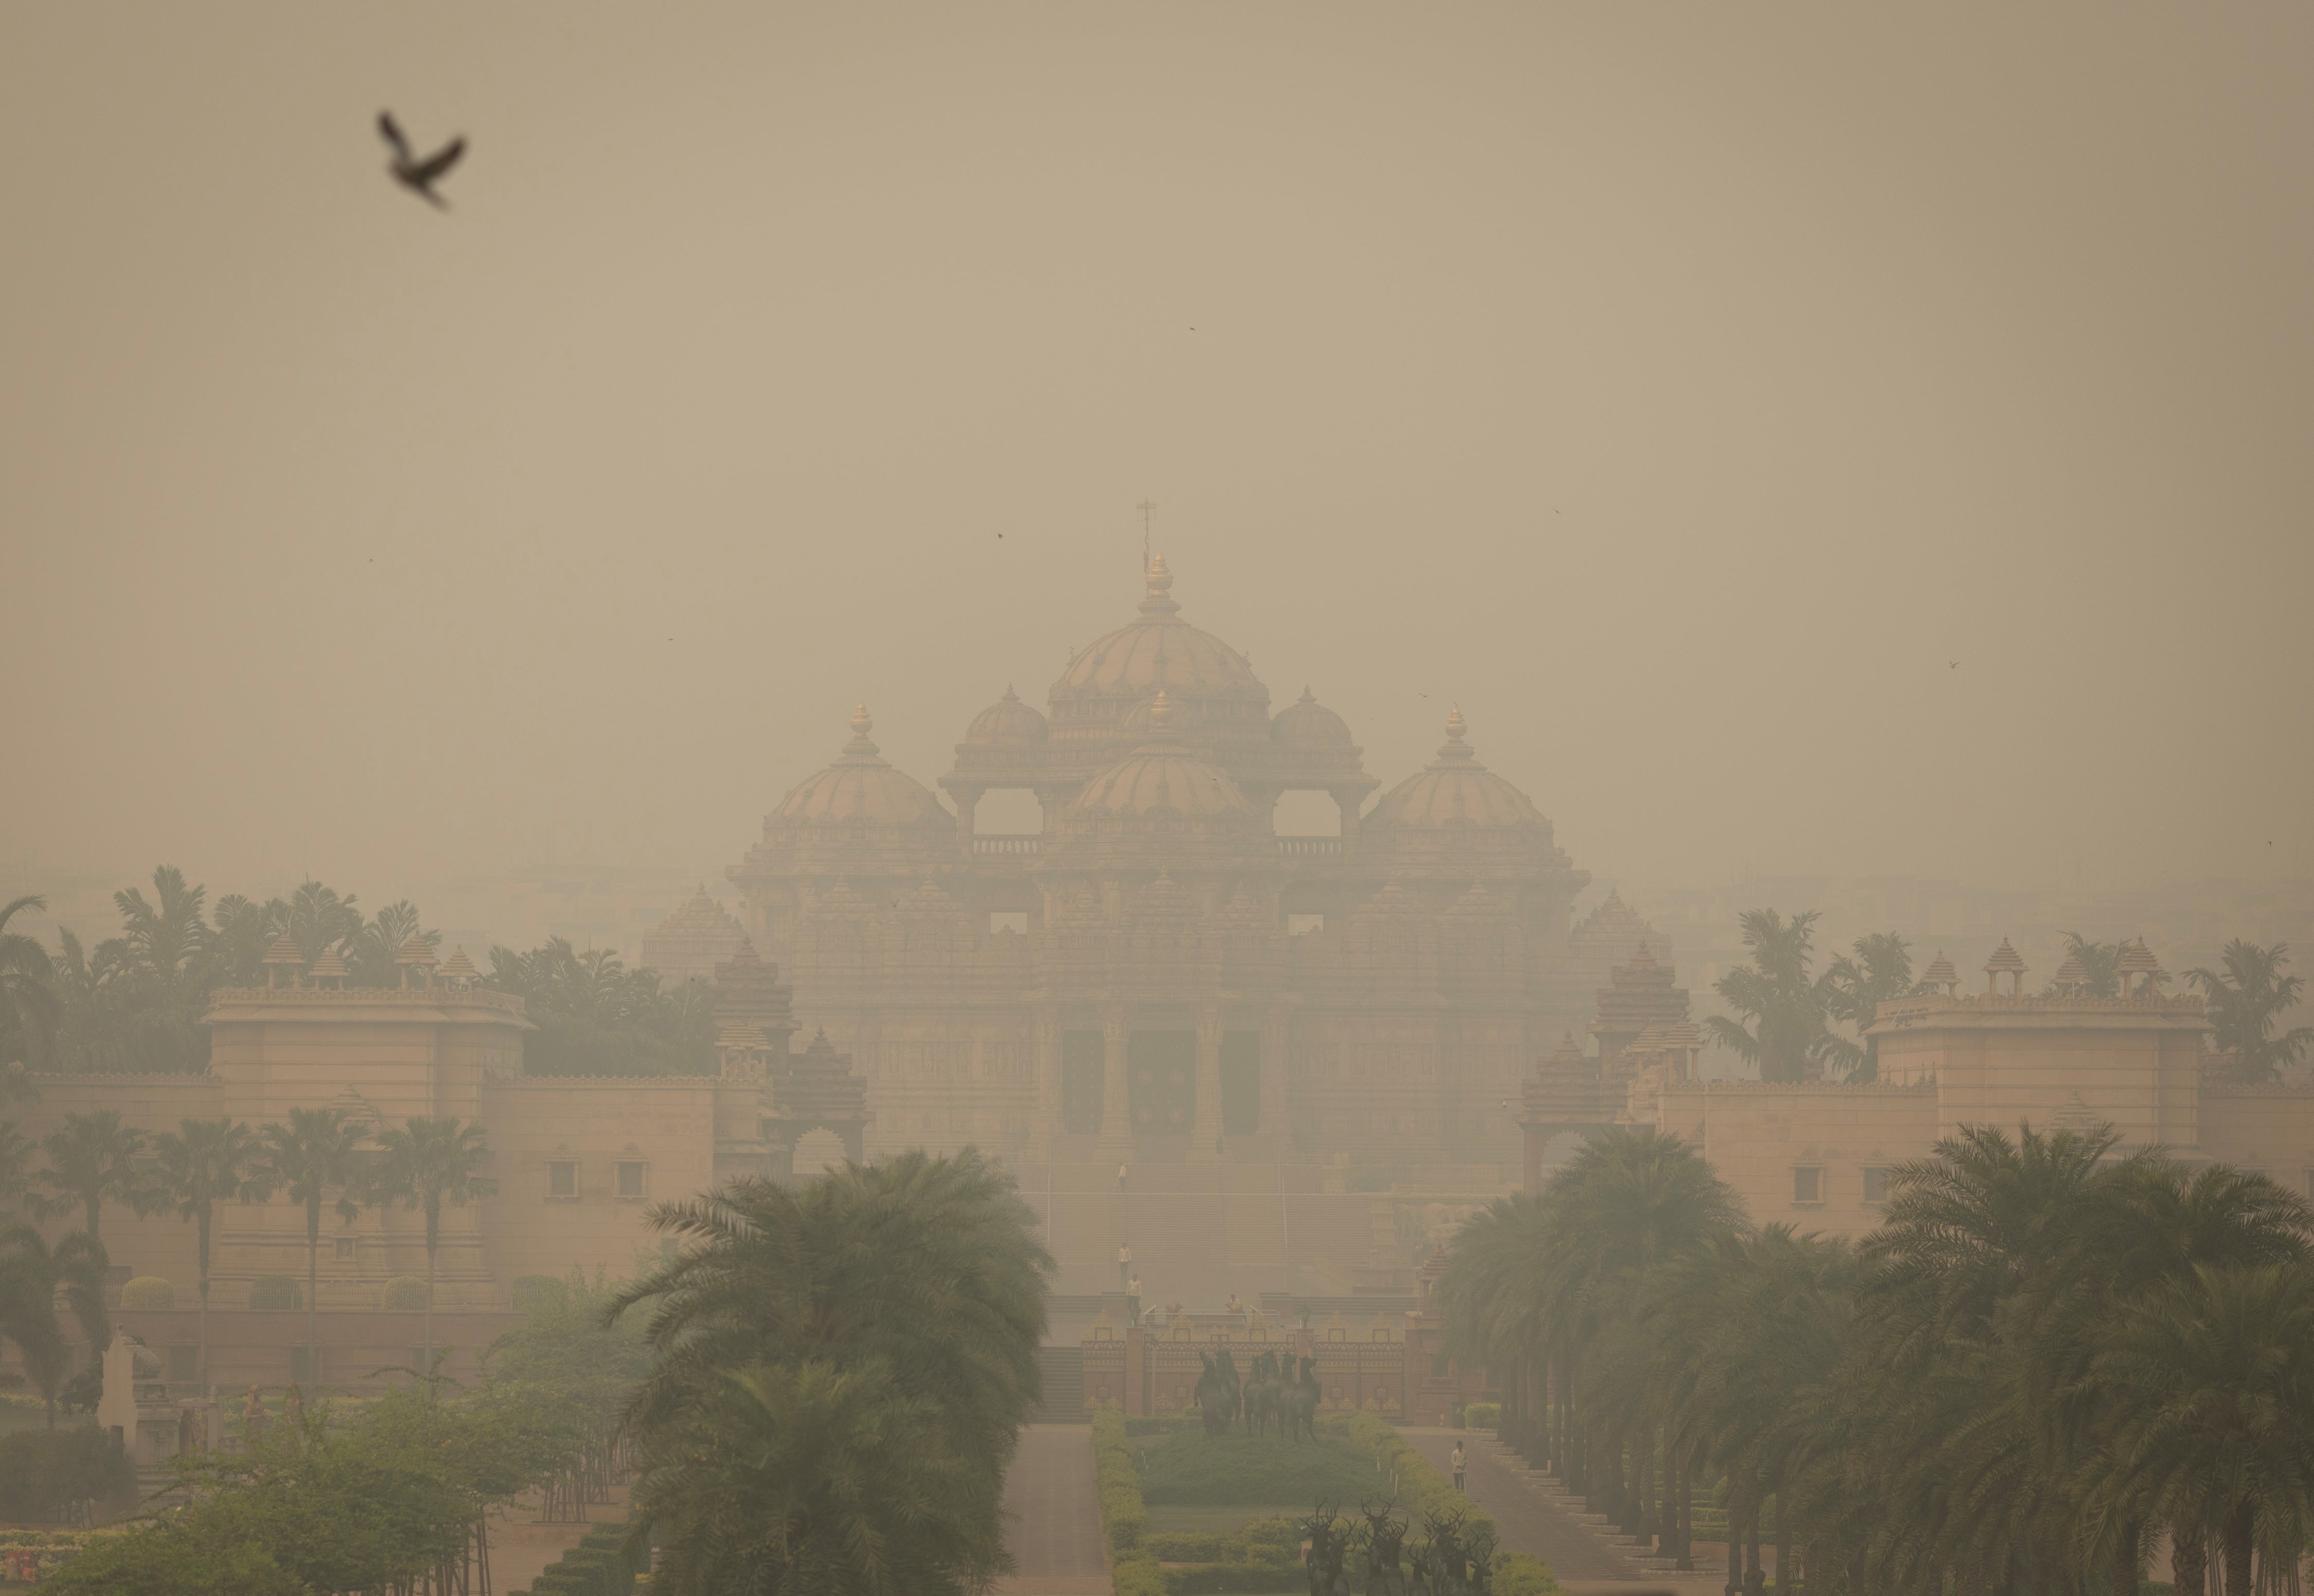 A bird flies next to the smog-covered Akshardham temple